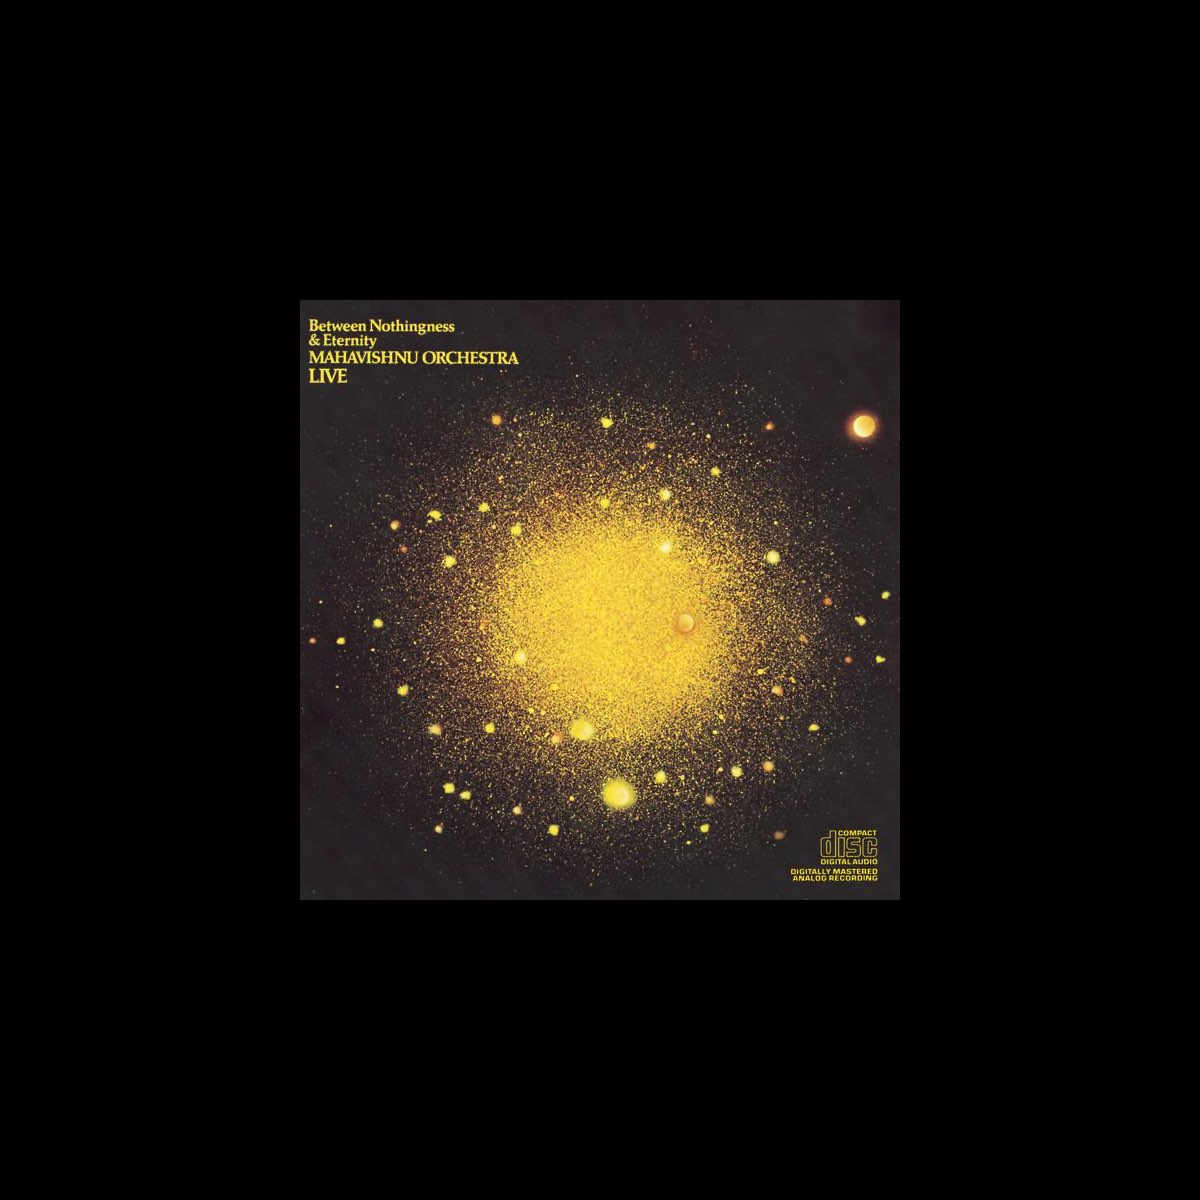 ‎Between Nothingness & Eternity by Mahavishnu Orchestra on Apple Music